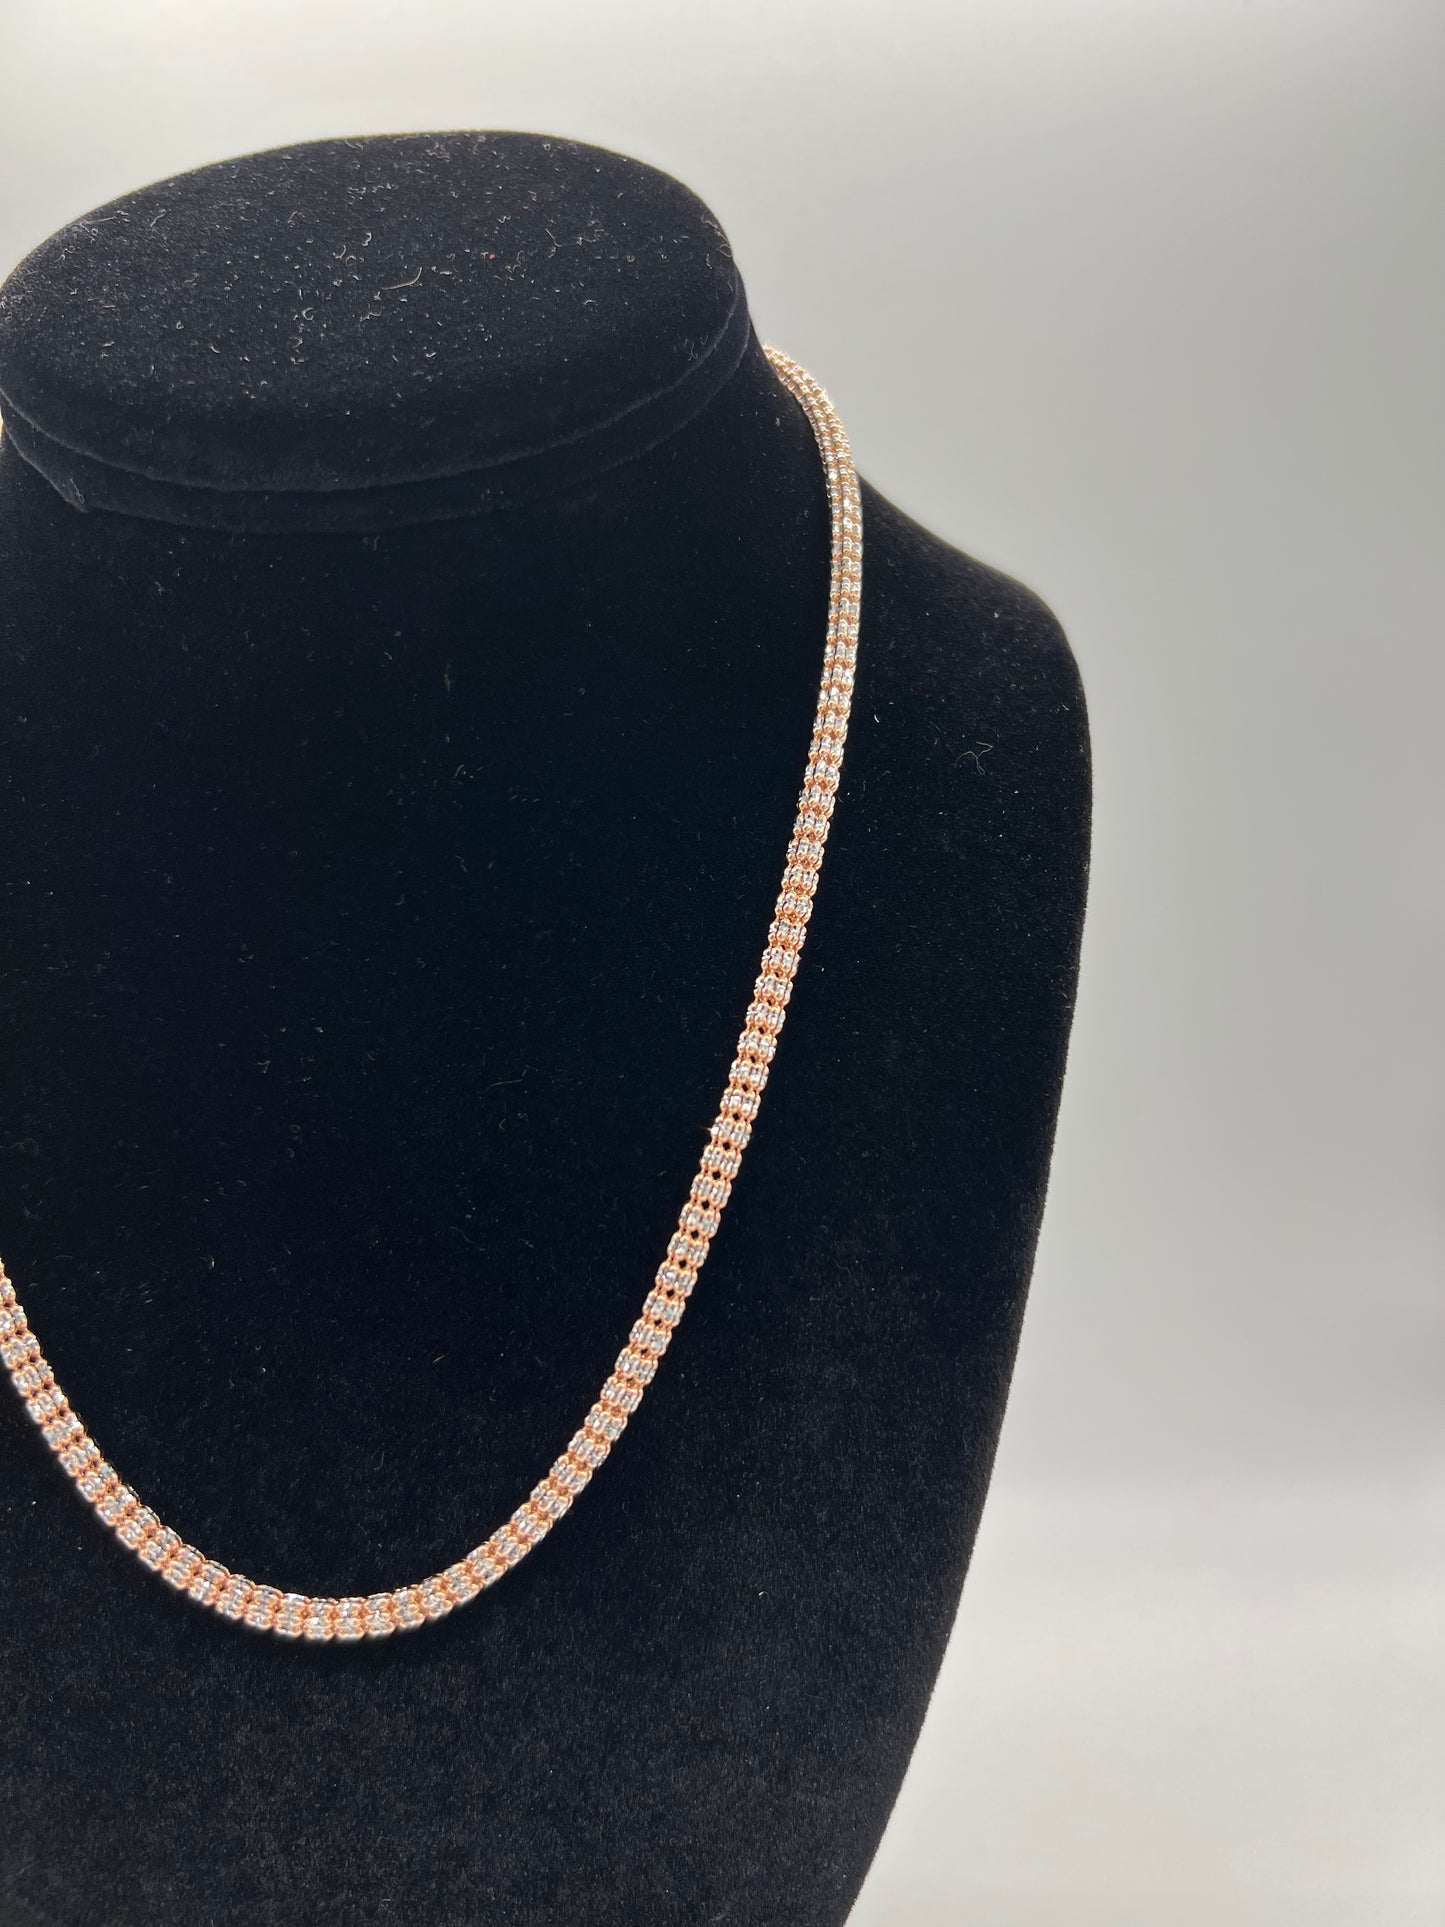 10k gold | shiny roller necklace